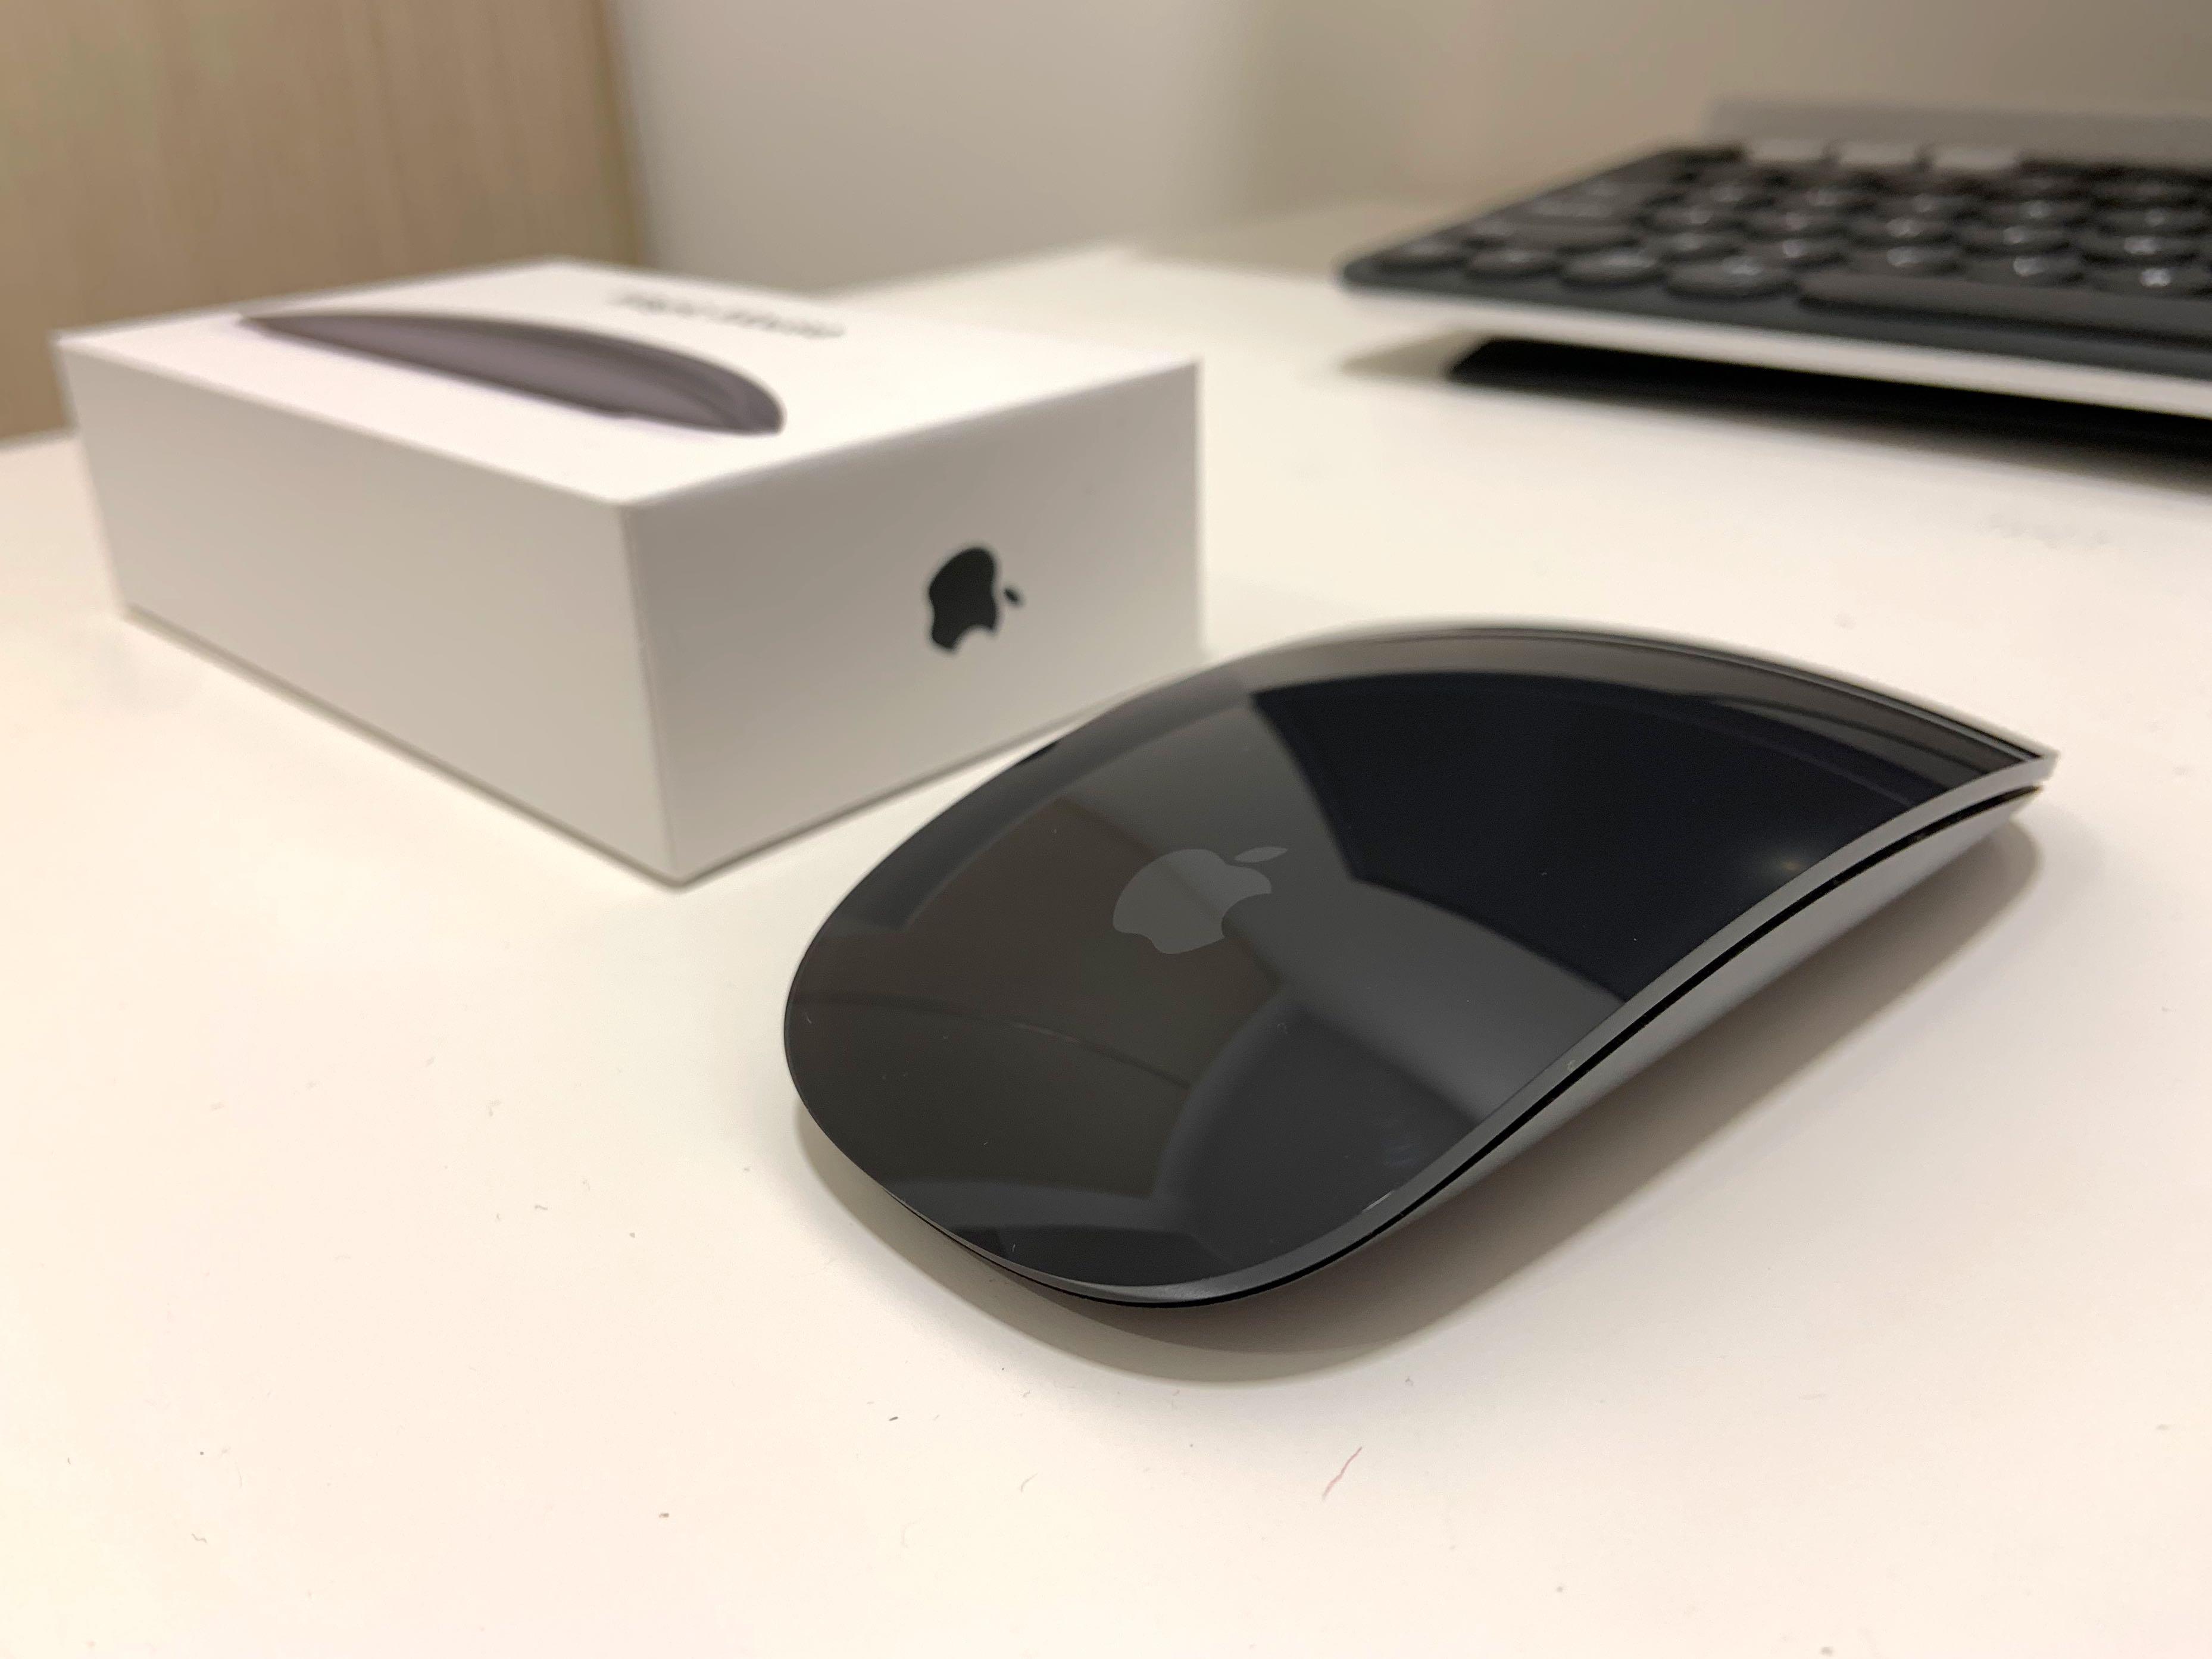 MacBookProMagic Mouse2 スペースグレイ  Apple